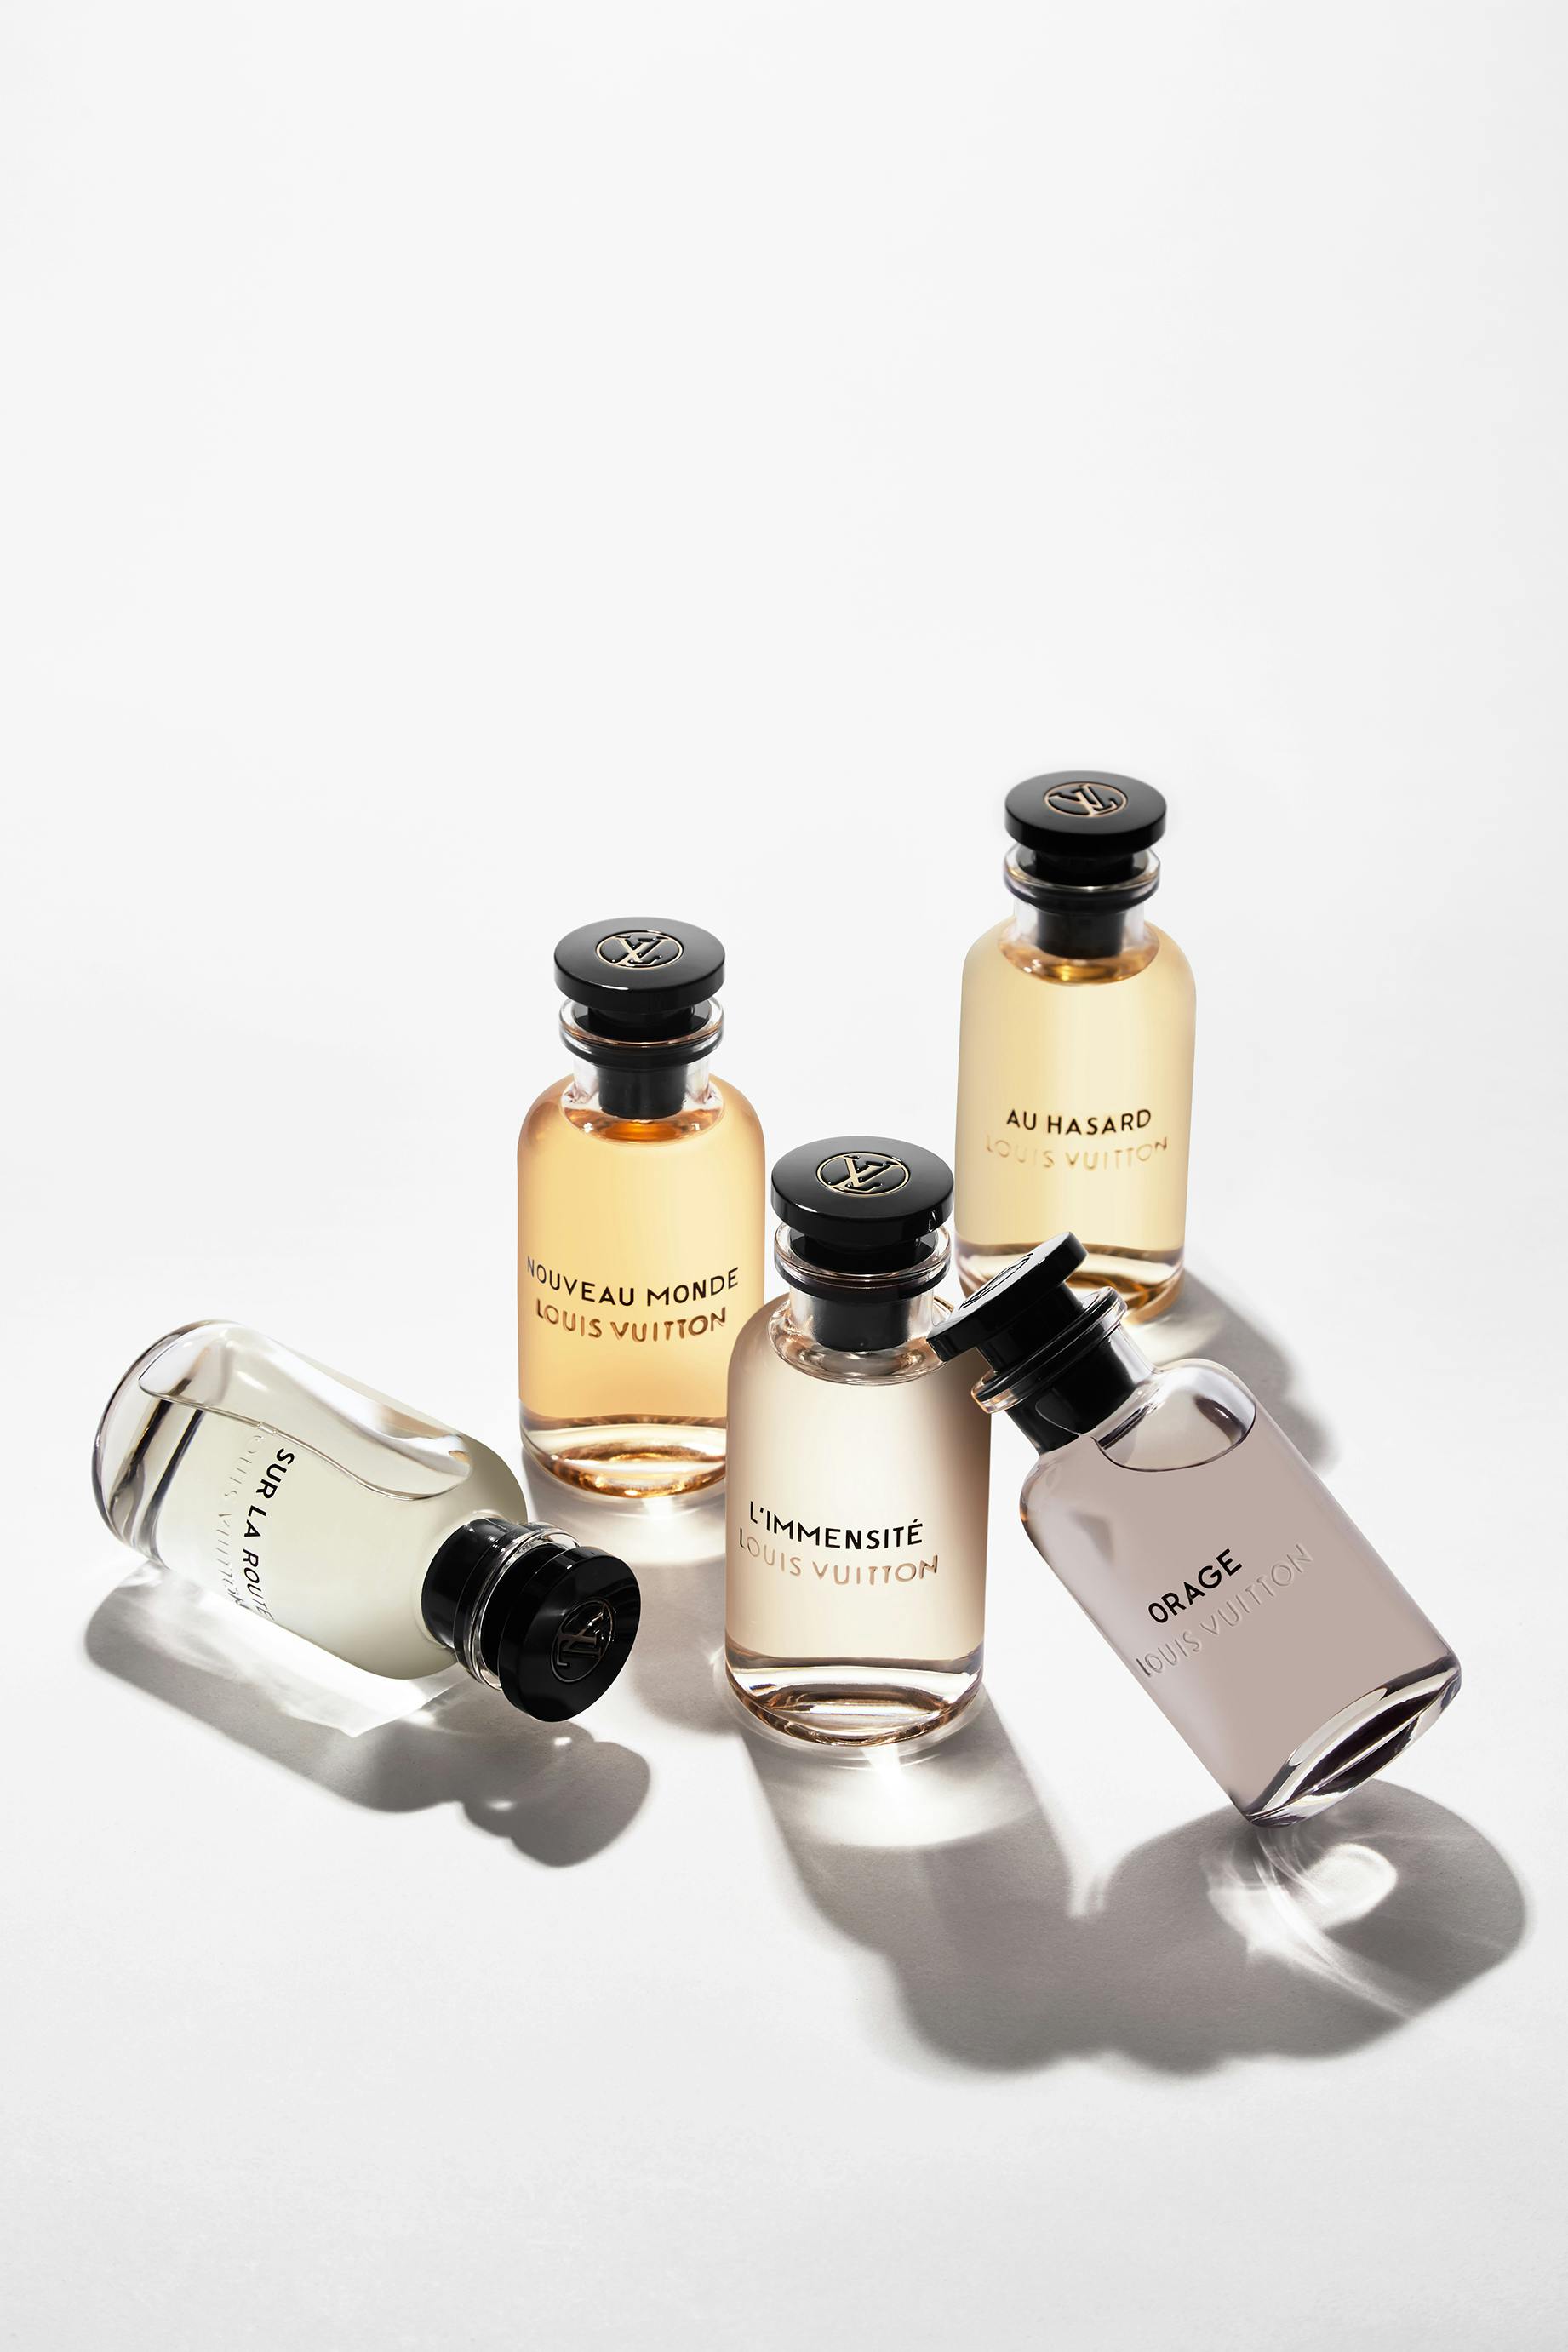 Parfum Orage - Parfums - Collections